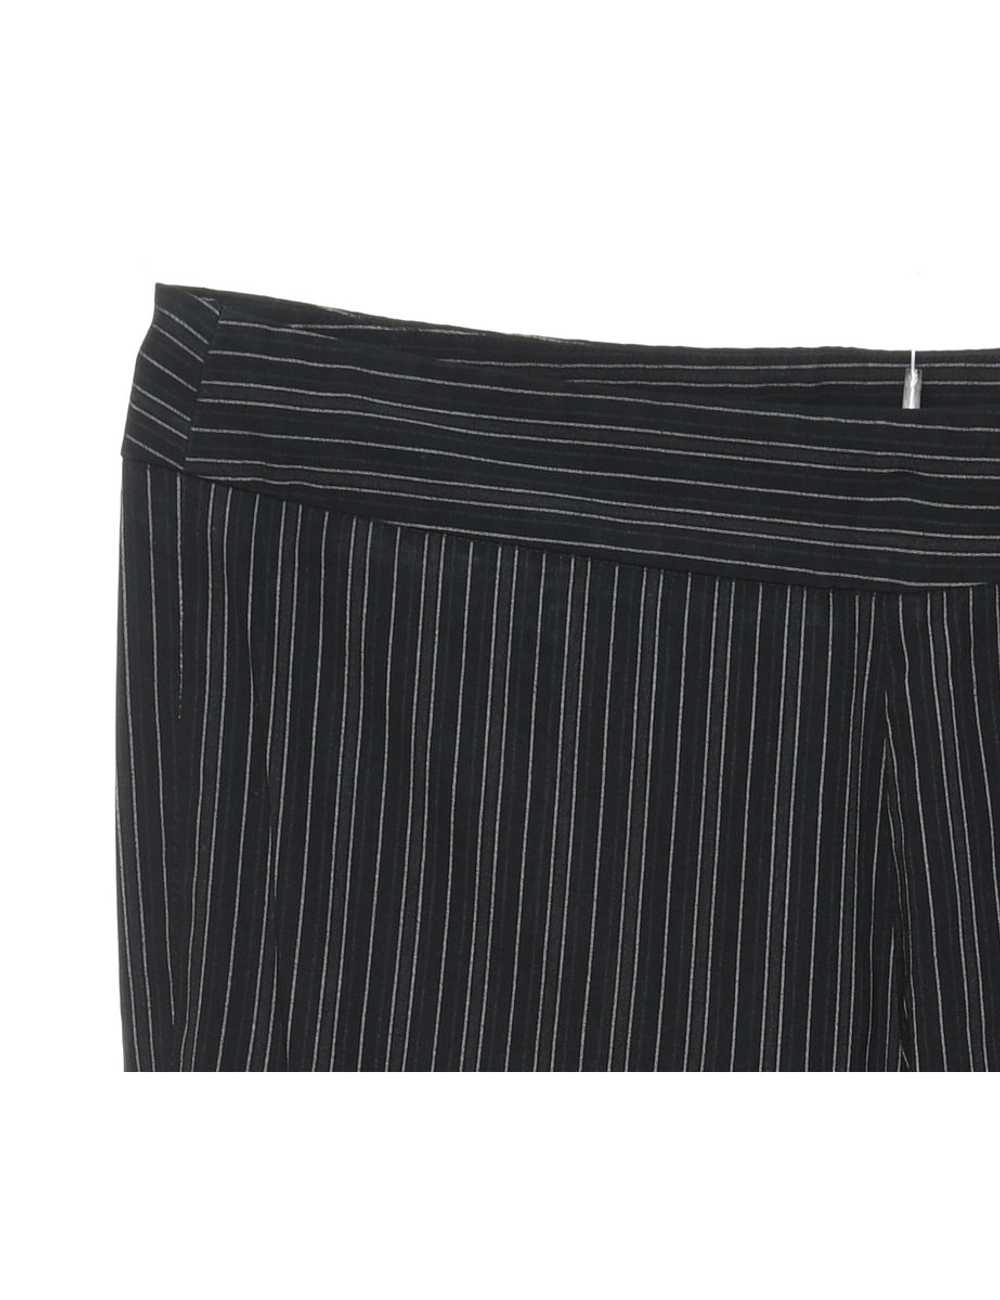 Pinstripes Black Trousers - W30 L29 - image 3